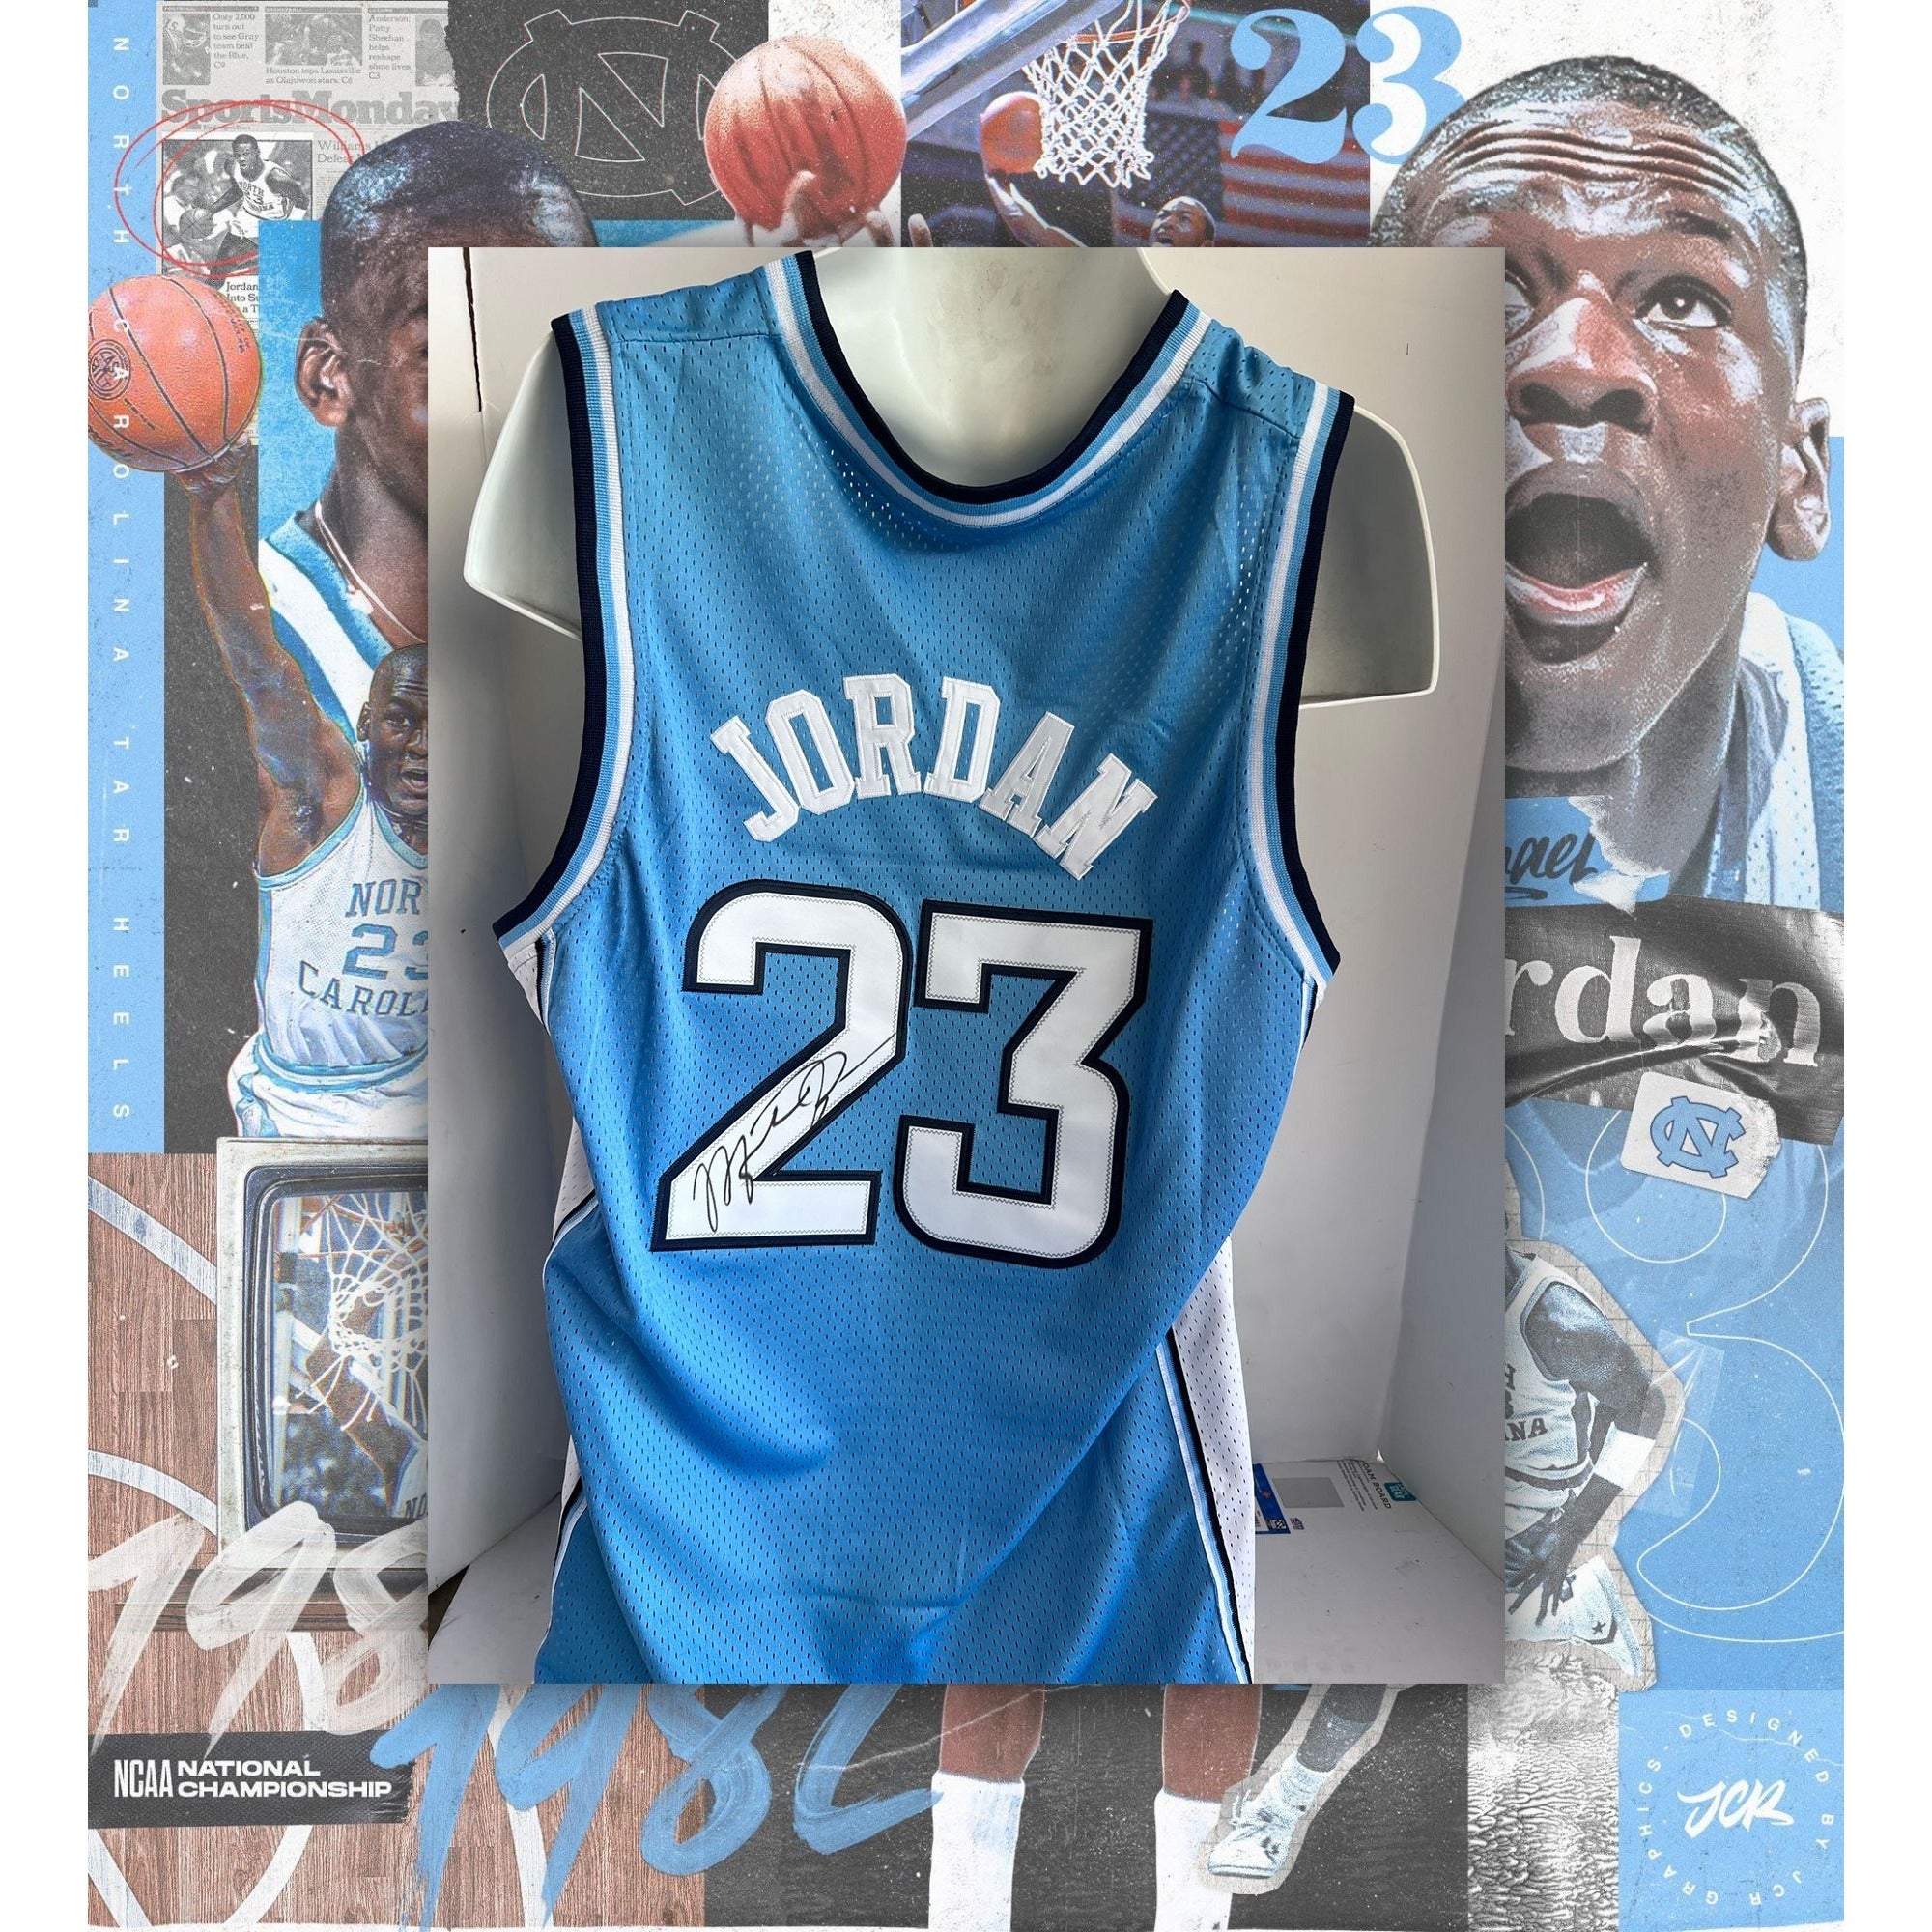 Michael Jordan North Carolina Tar Heels game model jersey signed with proof